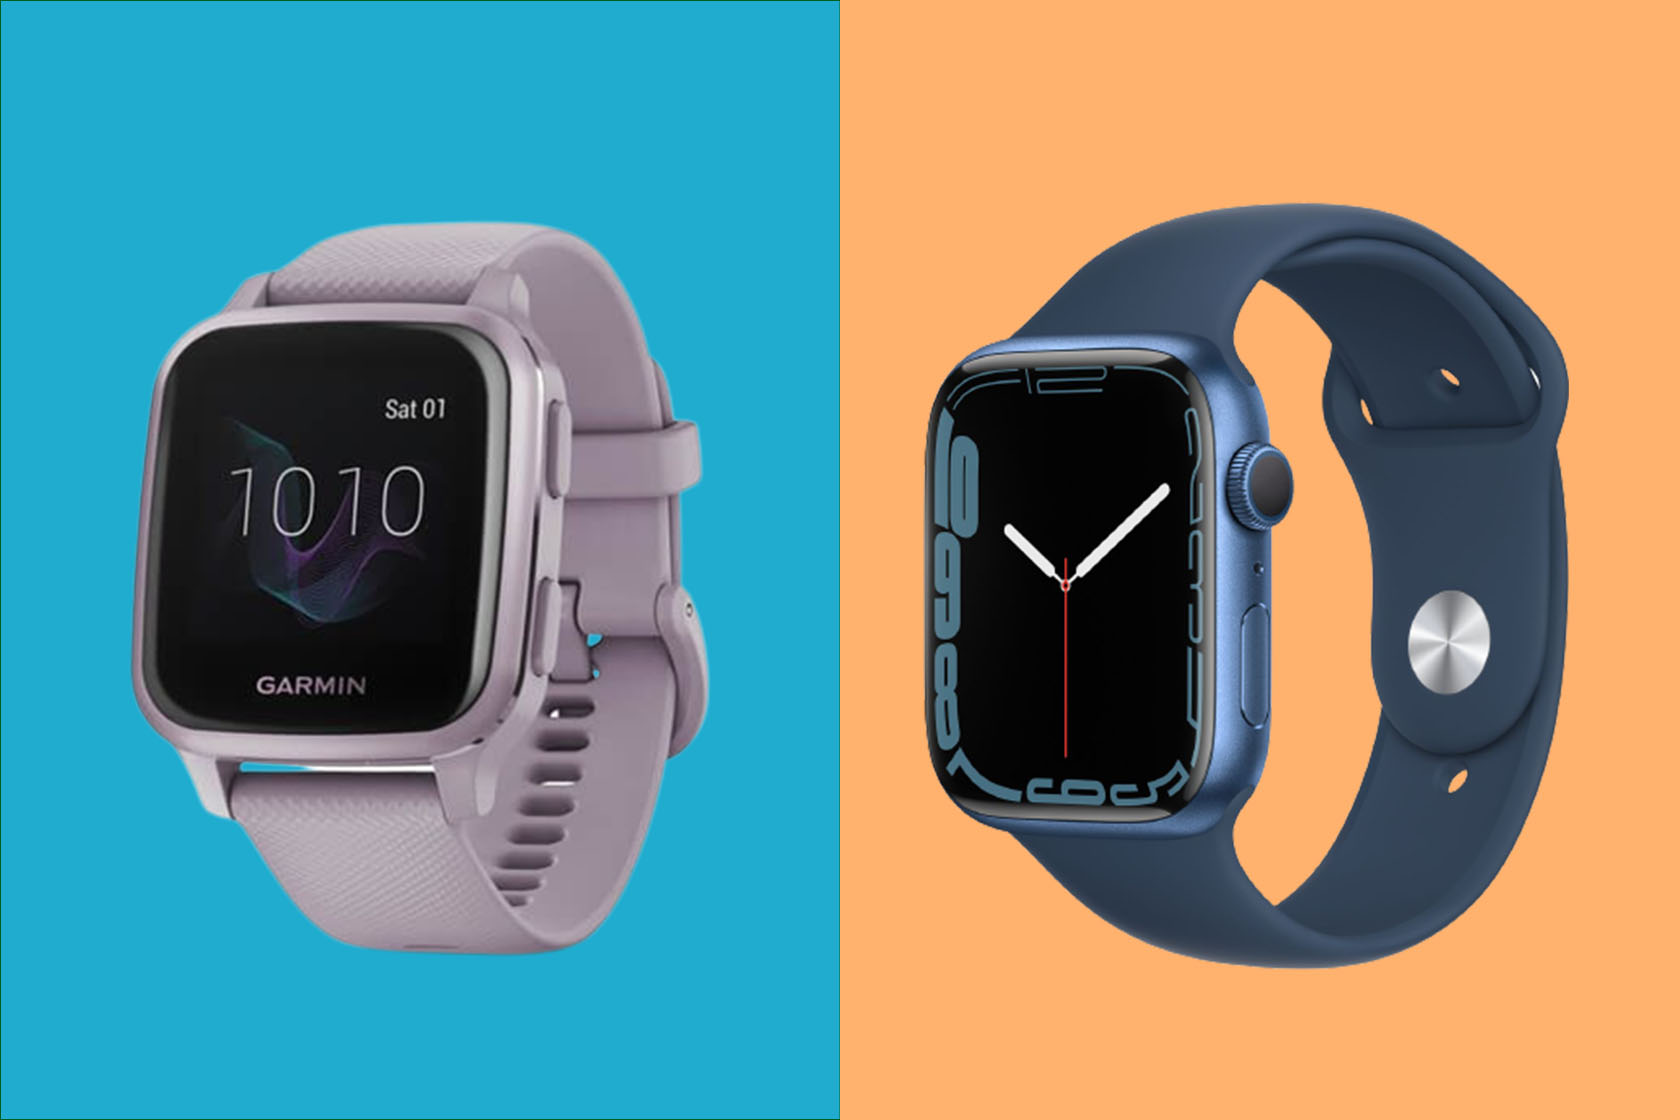 Apple Watch vs. Garmin: Which smartwatch should you buy?